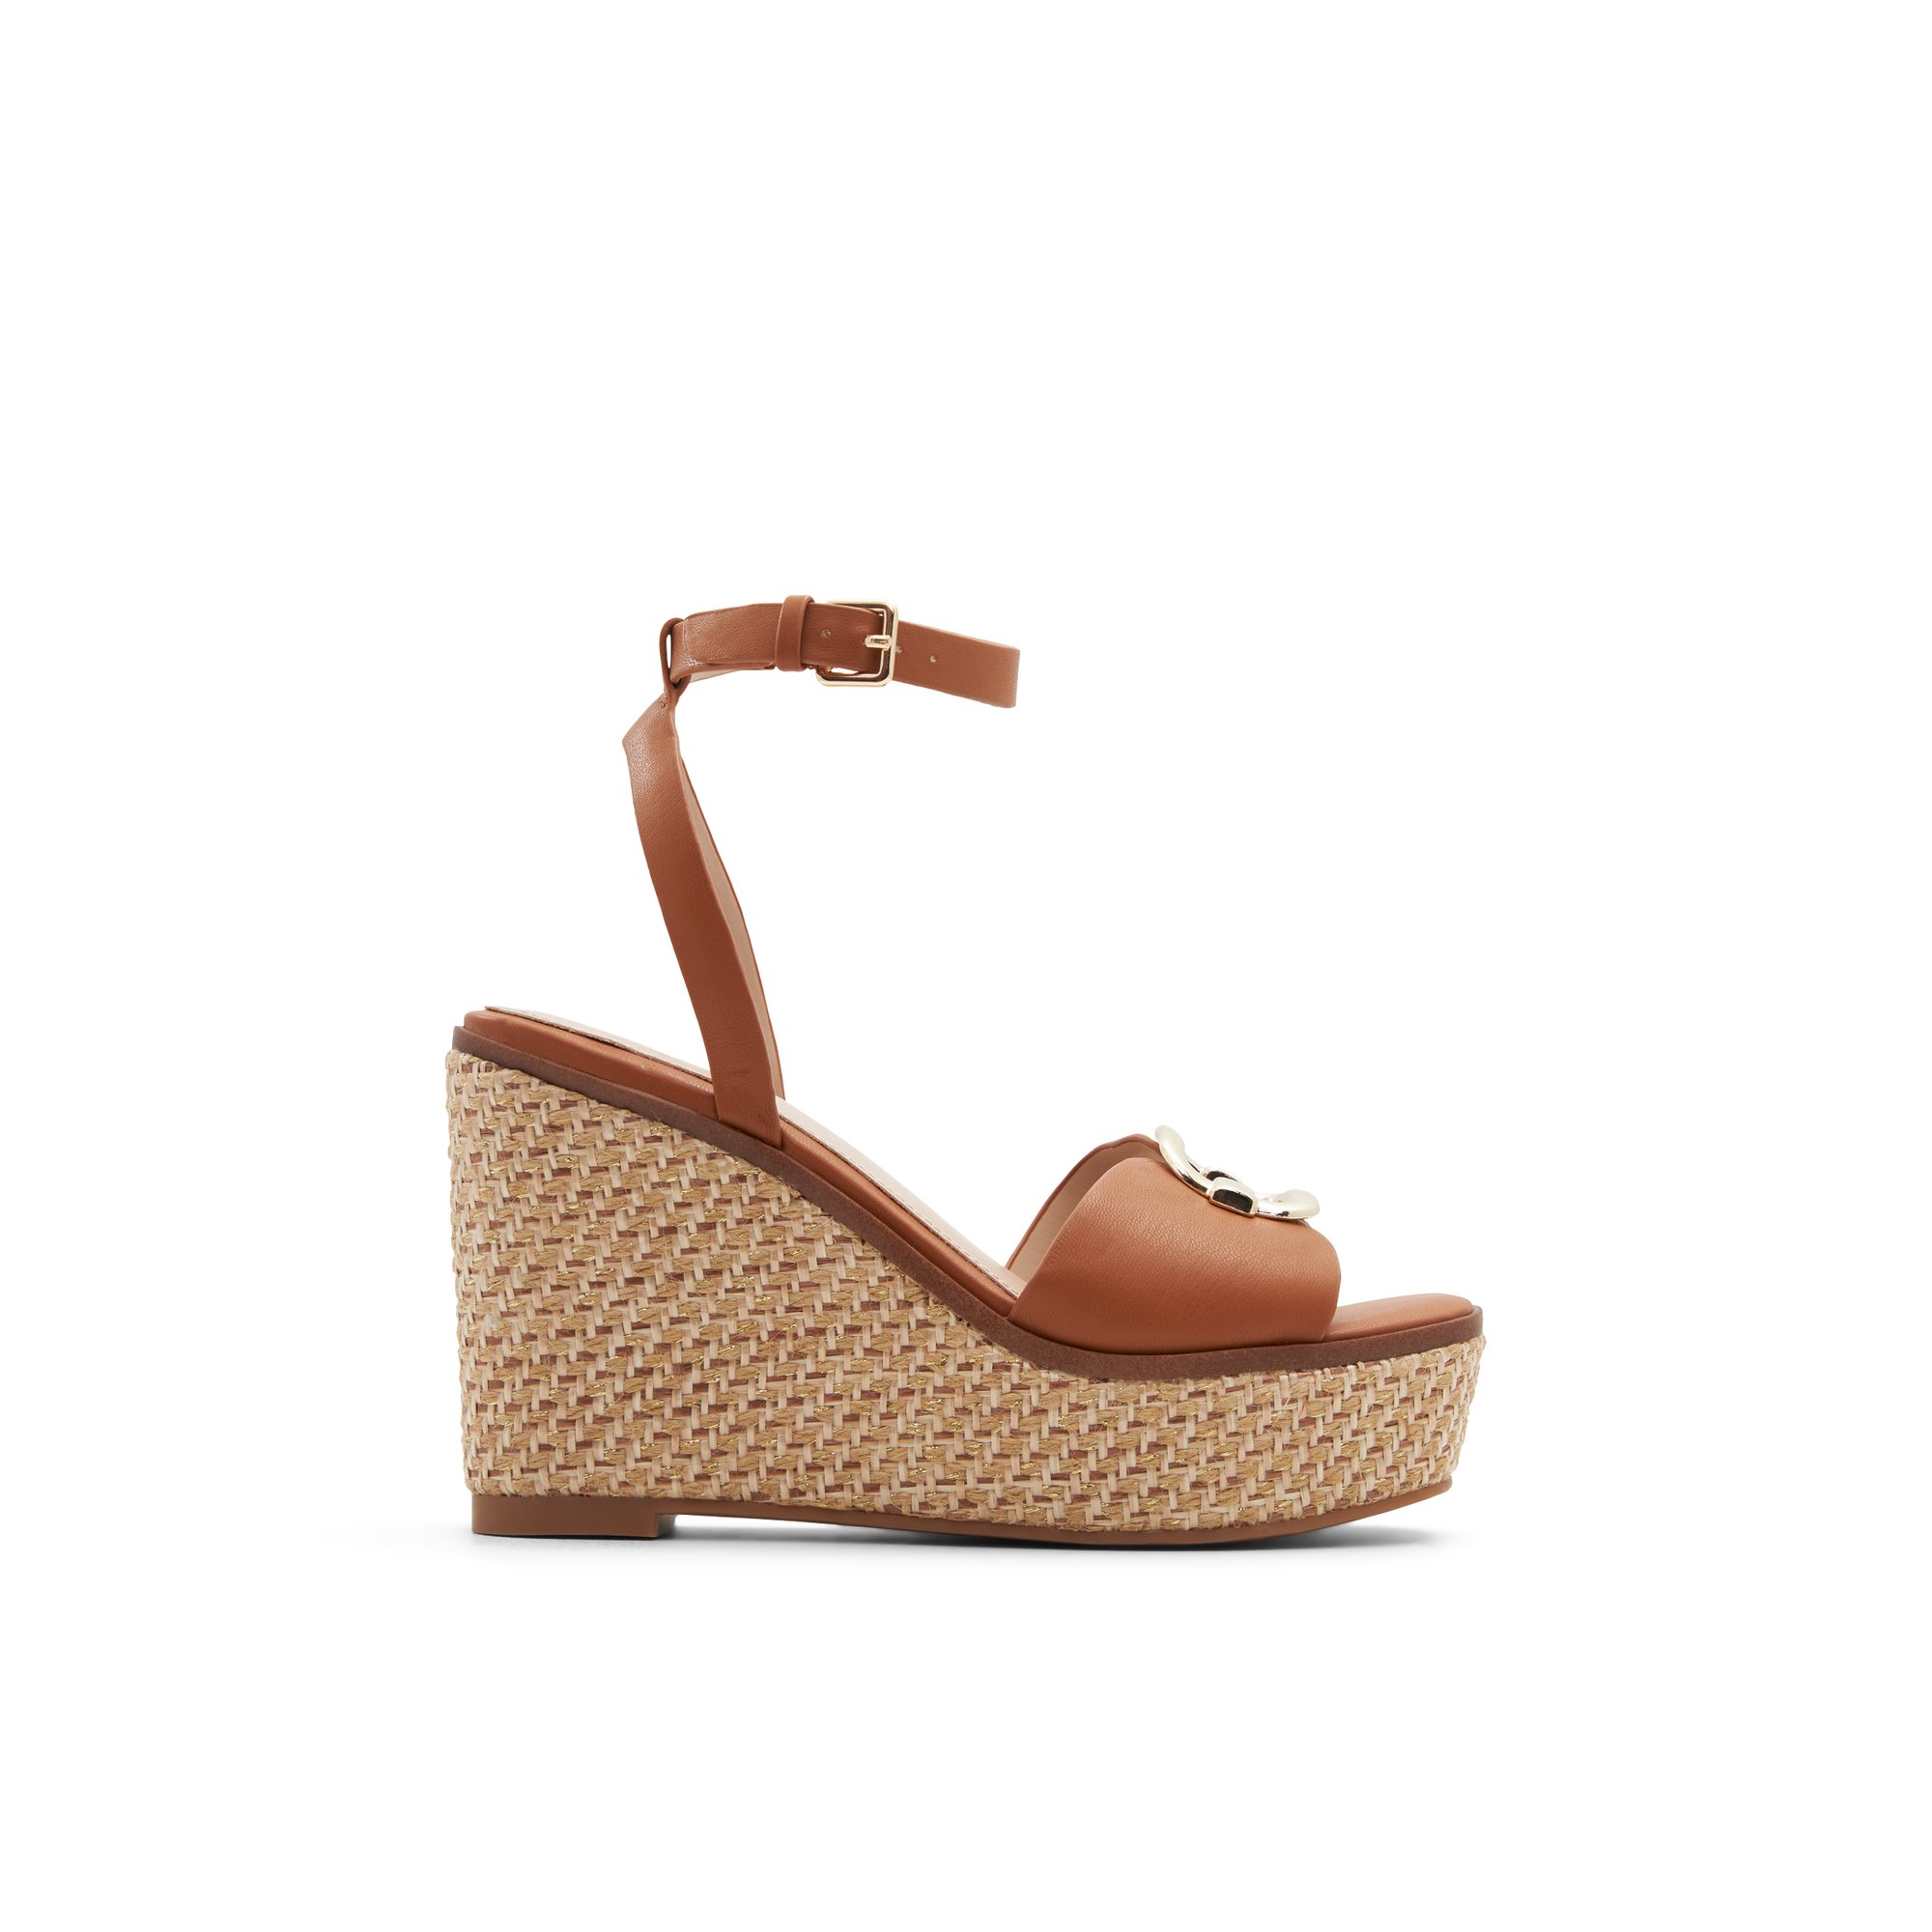 ALDO Carrabriria - Women's Sandals Wedges - Brown